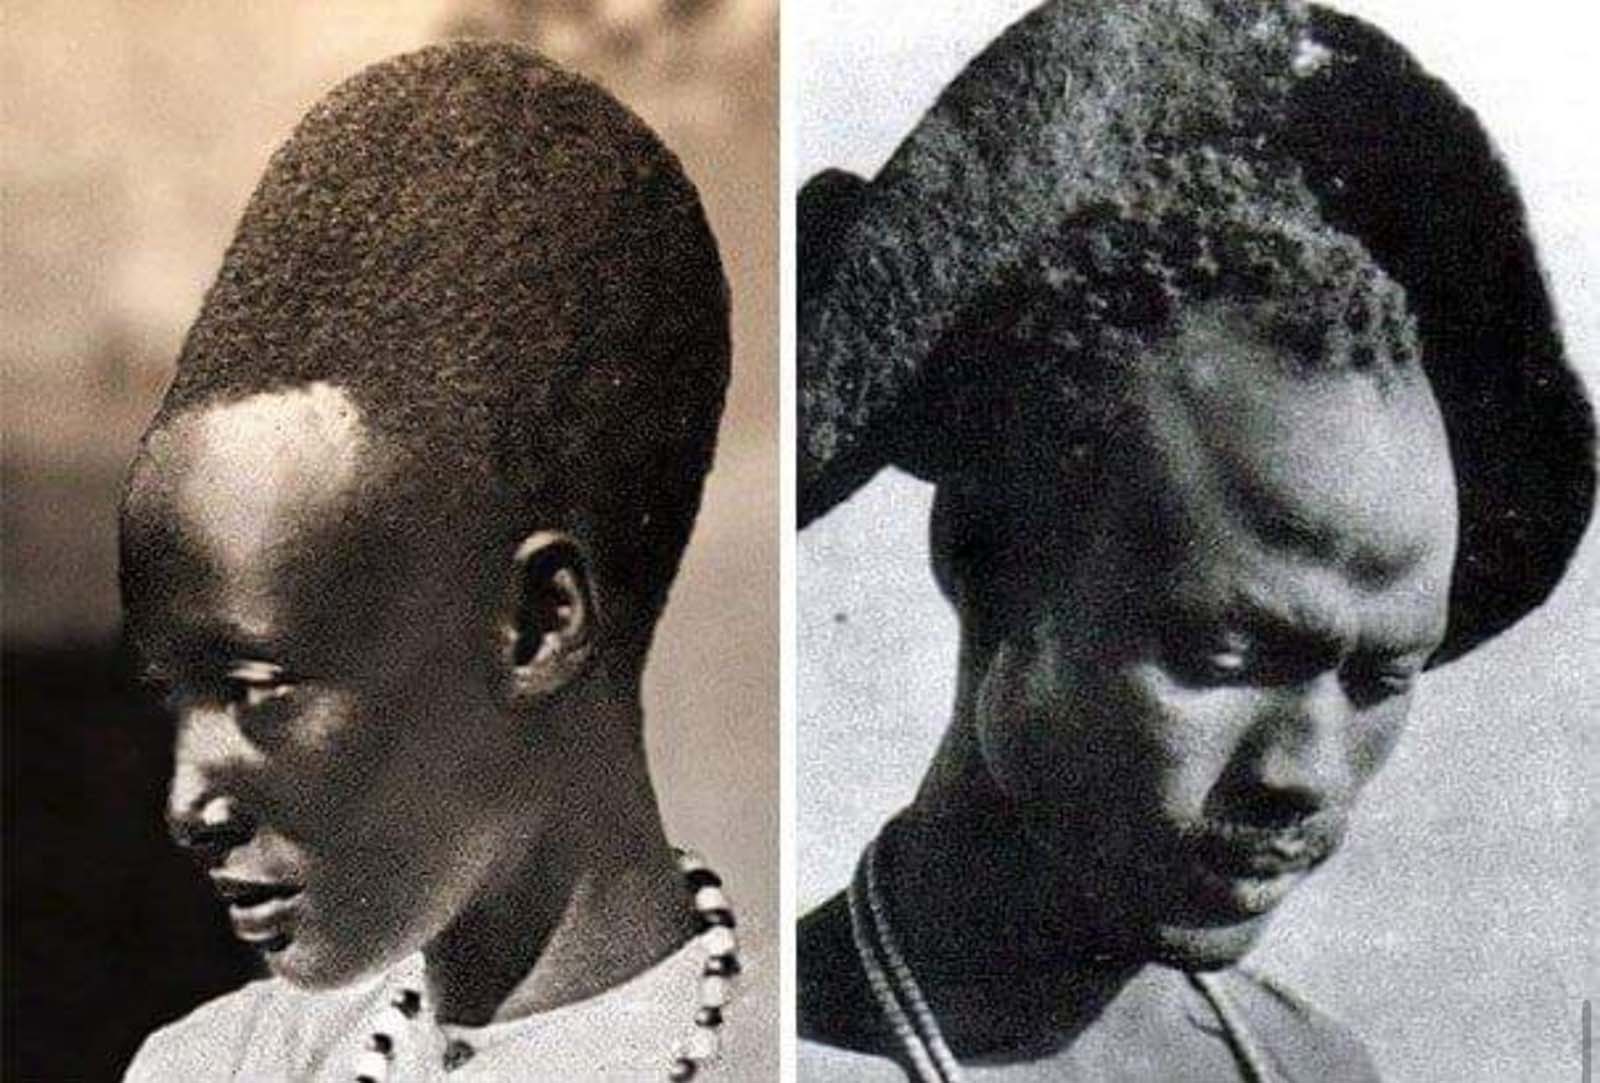 amasunzu rwandan hairstyle photos